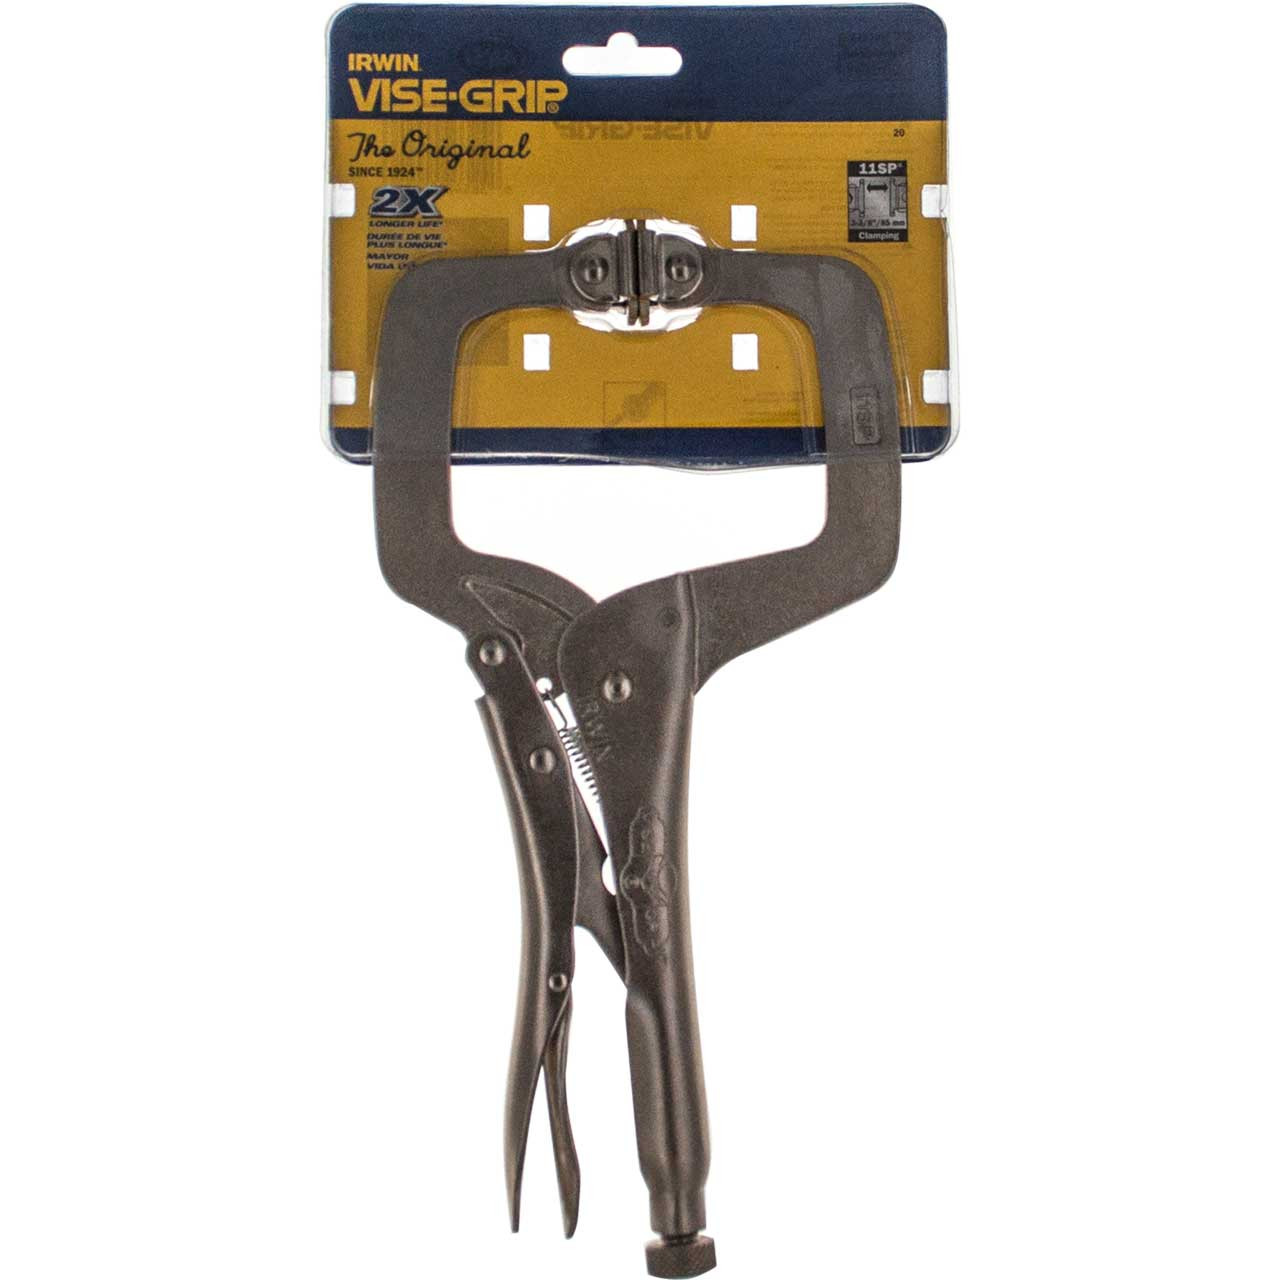 IRWIN VISE-GRIP 11-in Construction Locking Pliers Swivel Tips in